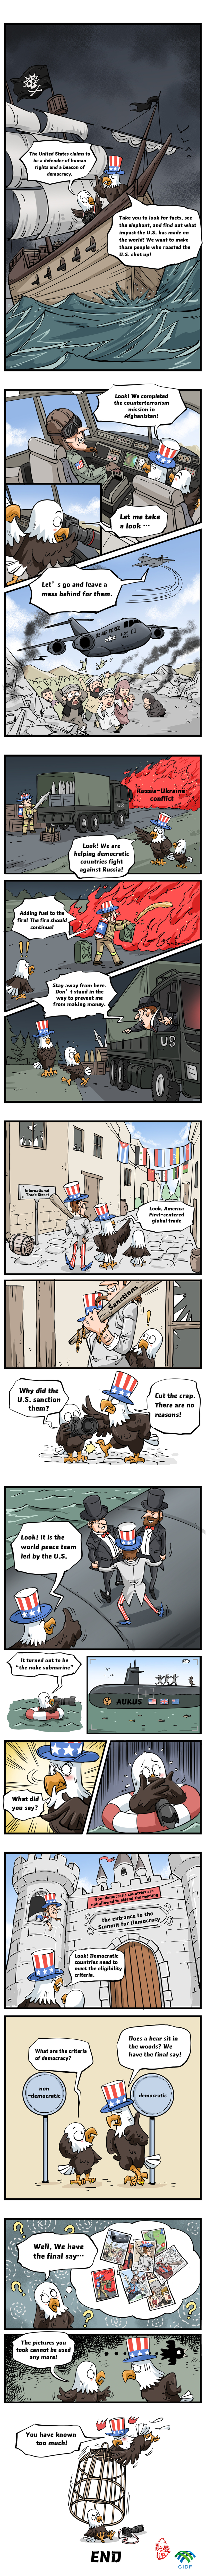 【Editorial Cartoon】Comics | The Facade of American Democracy(2)_fororder_英文版